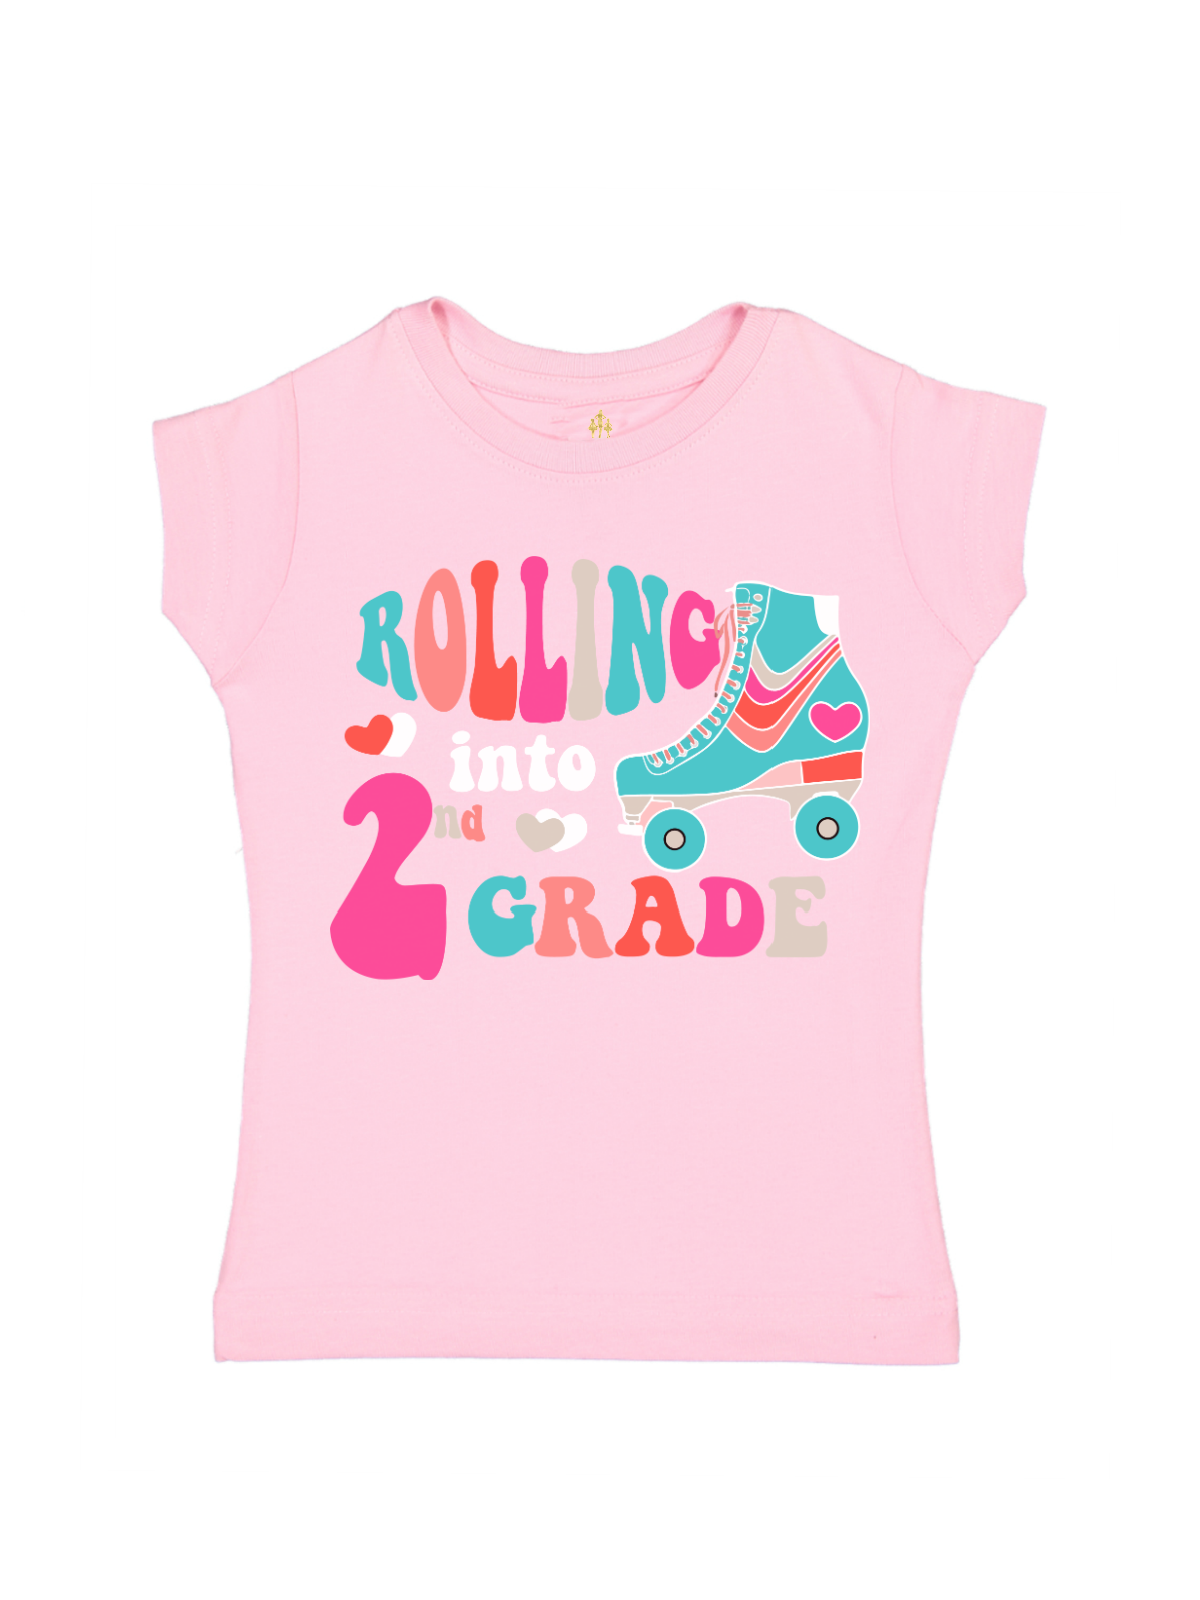 Rolling into 3rd Grade Girls Skating Shirt in Light Pink